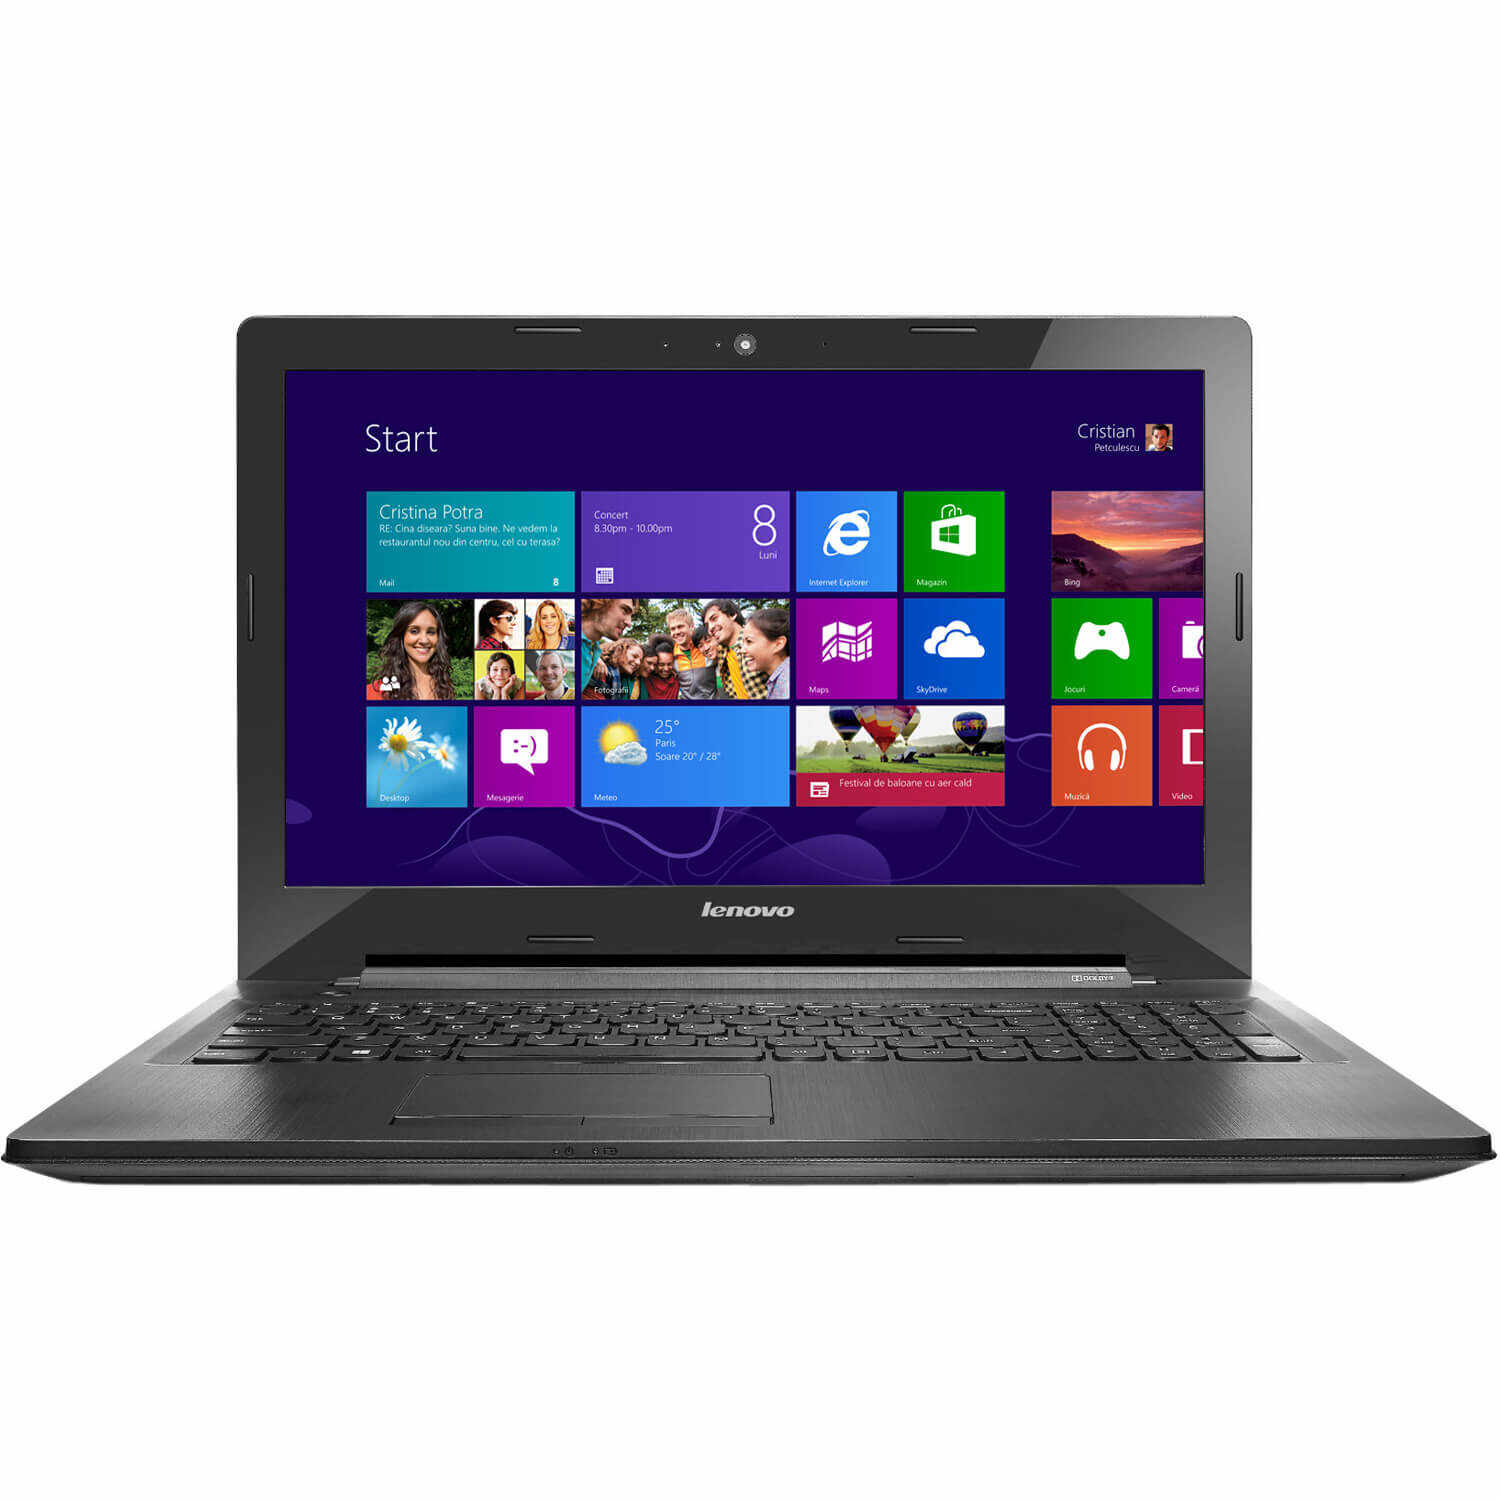 Laptop Lenovo G50-30, Intel Celeron N2840, 2GB DDR3, HDD 500GB, Intel HD Graphics, Windows 8